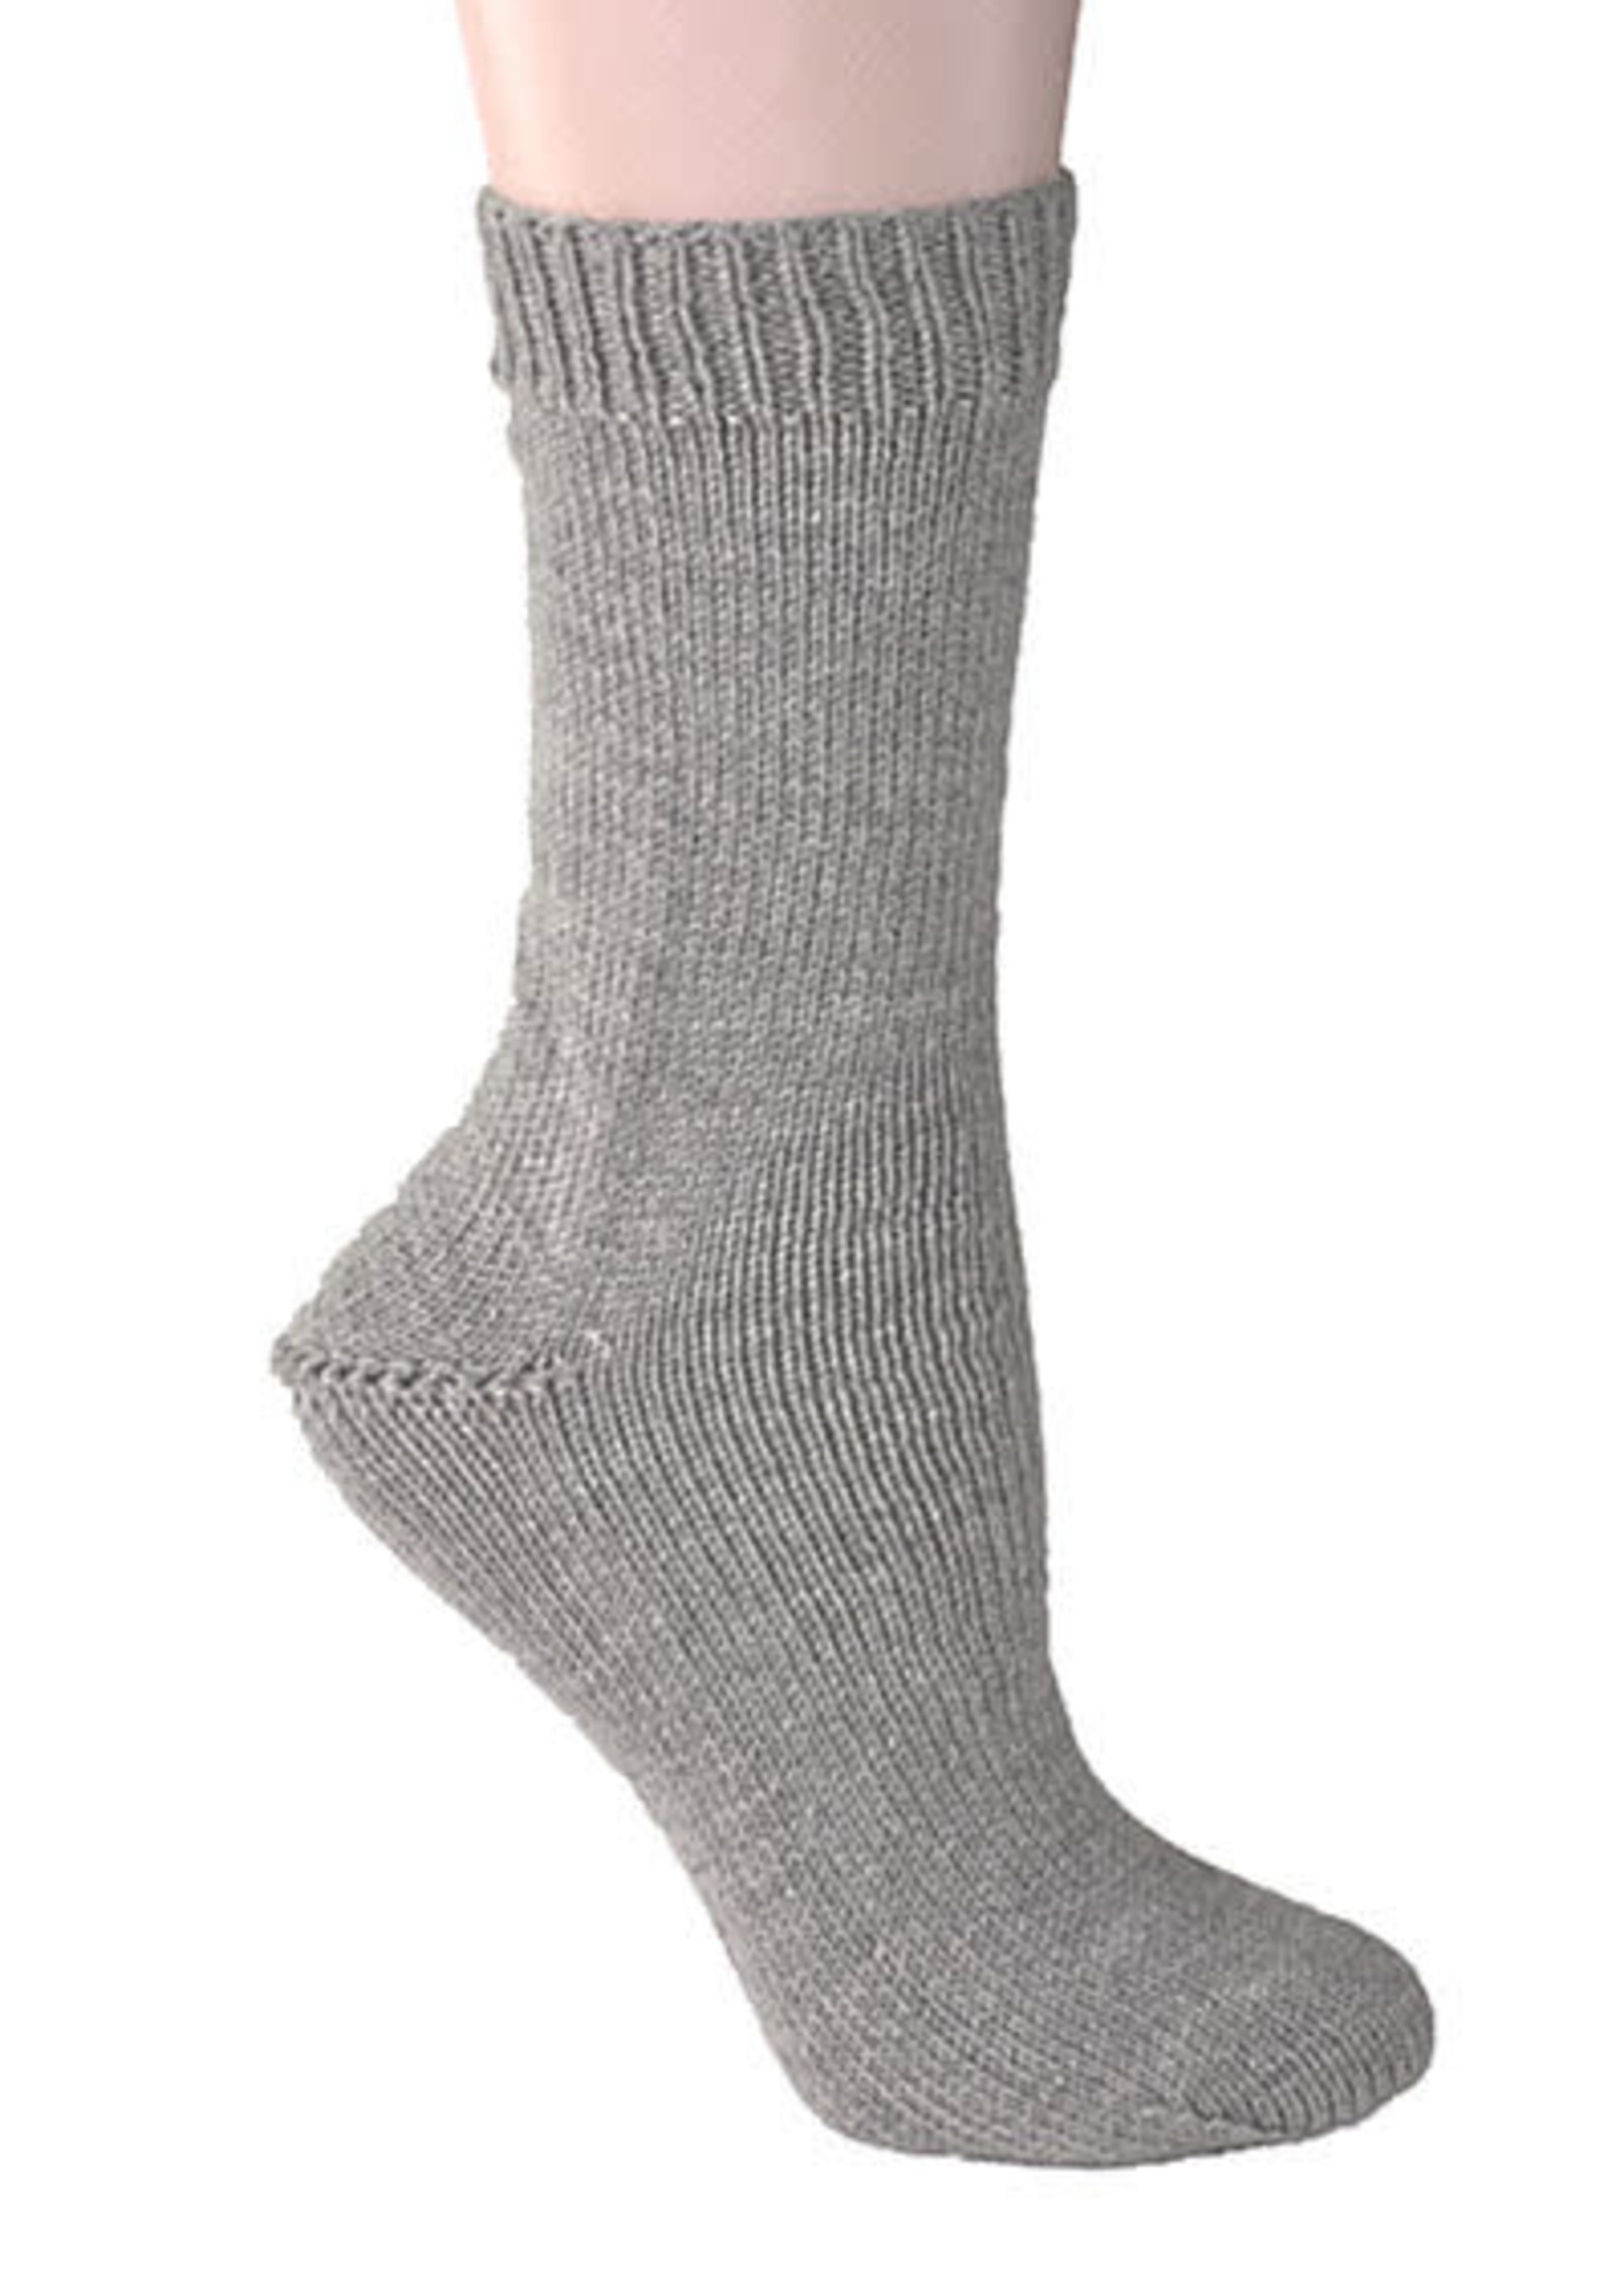 Berroco Berroco Comfort Sock Yarn #1770 Ash Grey